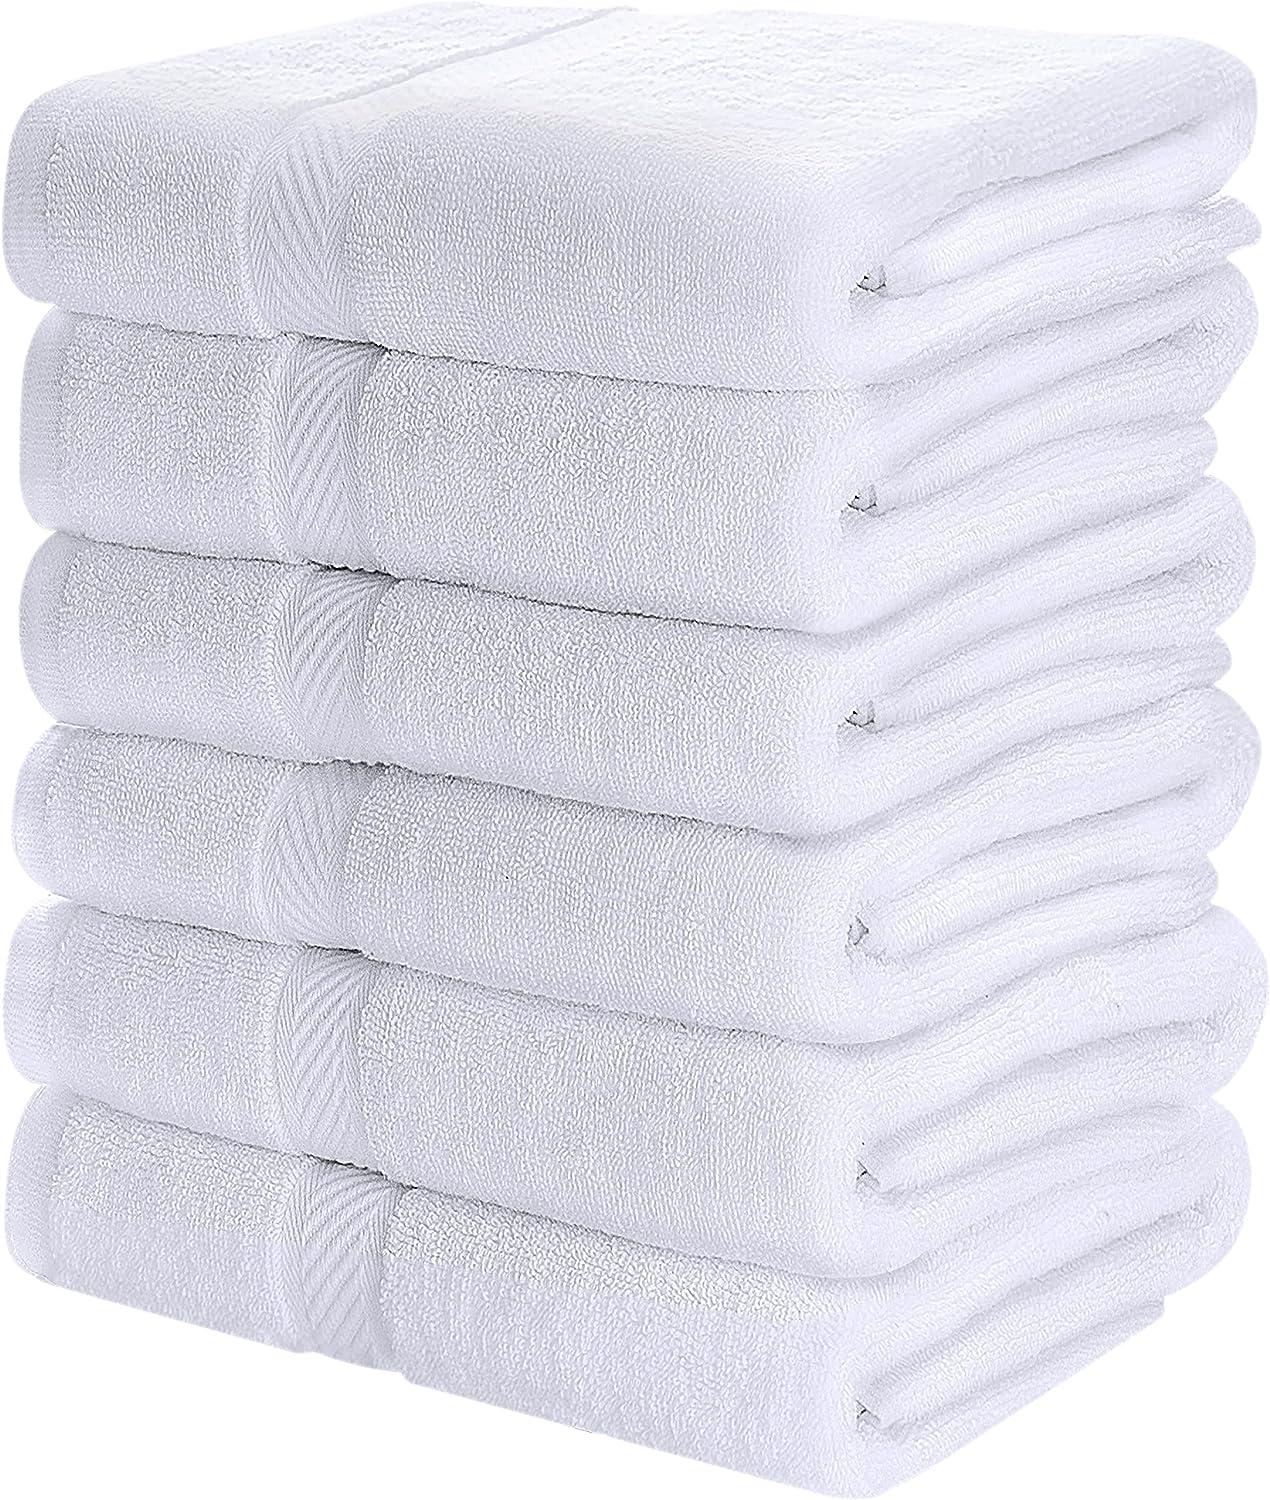 Utopia Towels [6 Pack Bath Towel Set, 100% Ring Spun Cotton (22 x